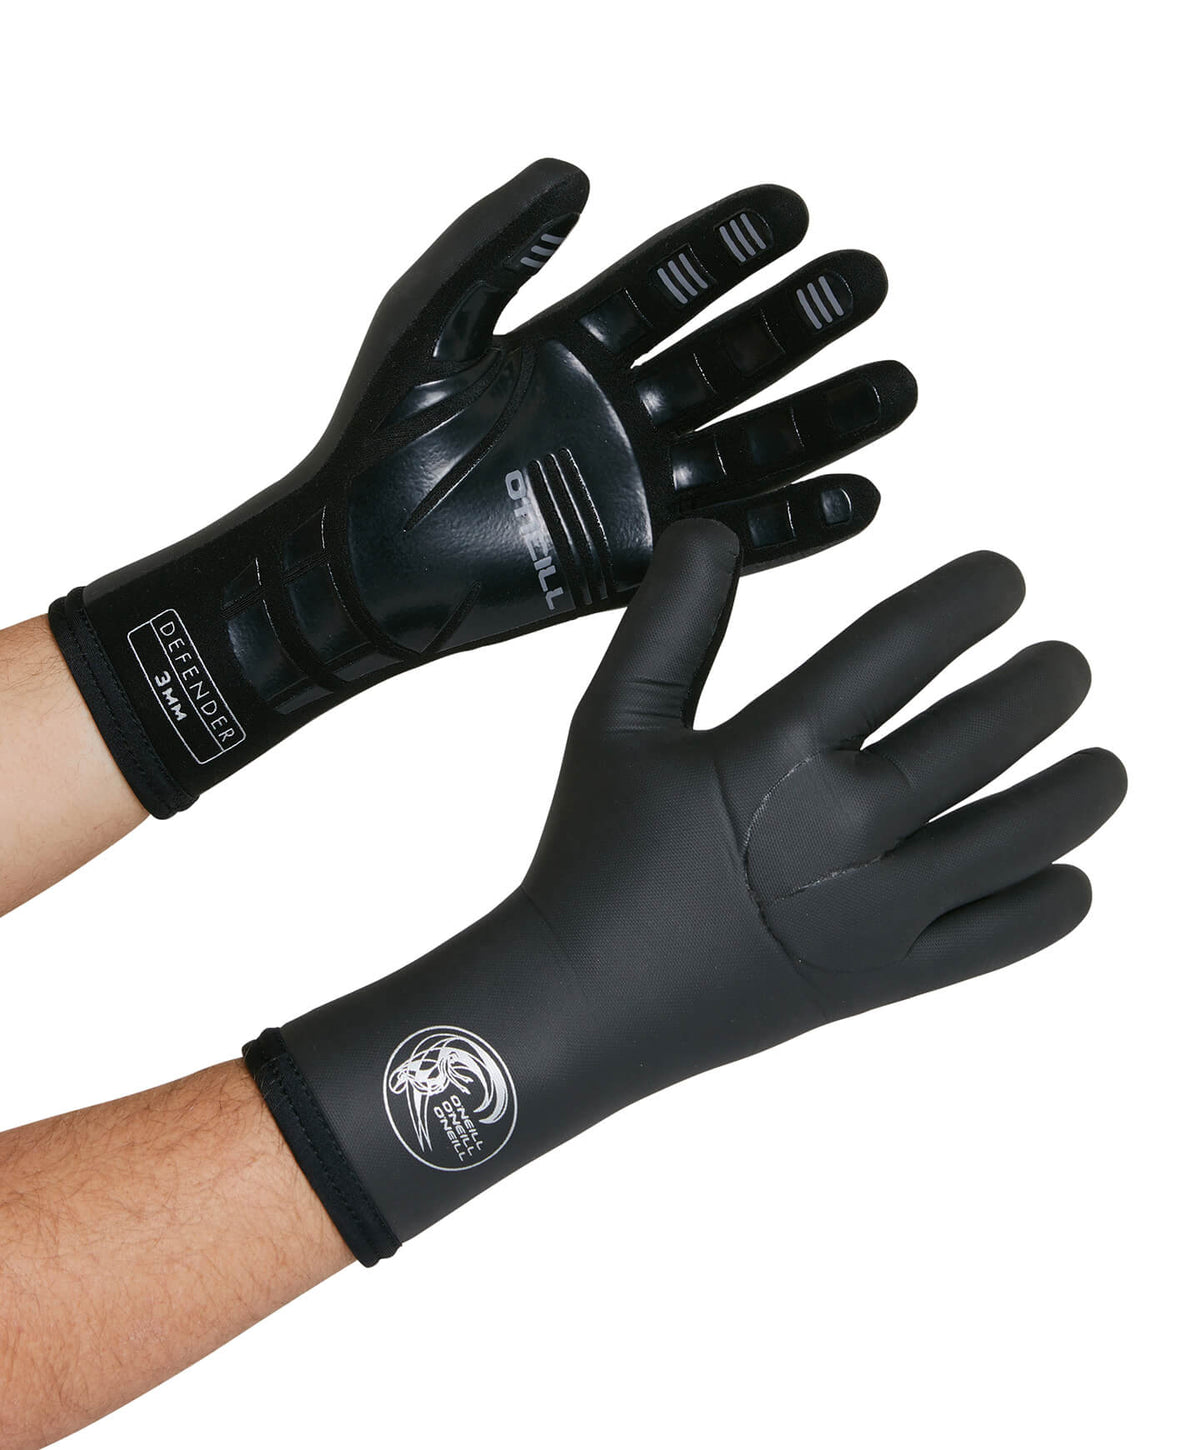 Defender 3mm Wetsuit Glove - Black